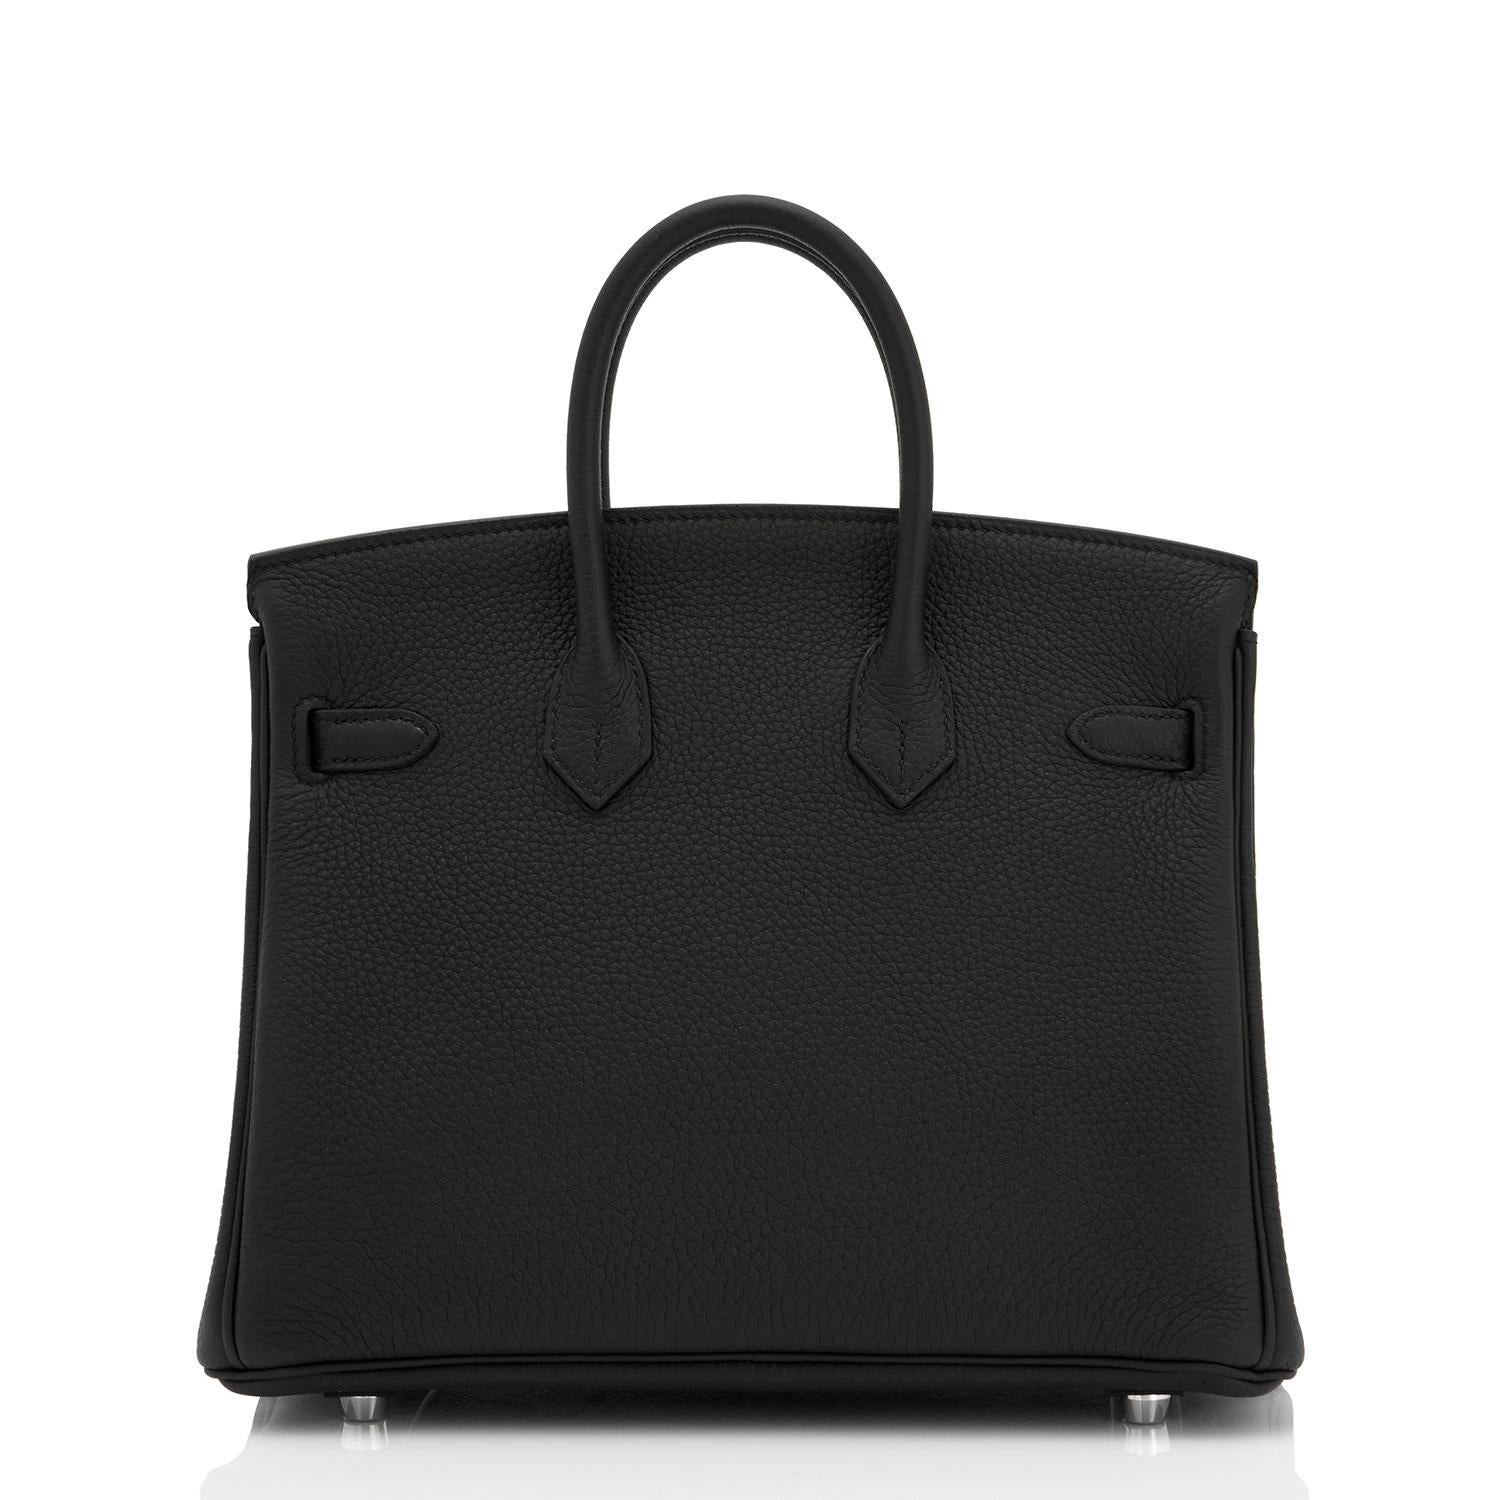 Hermes Birkin 25cm Black Togo Palladium Bag NEW 2